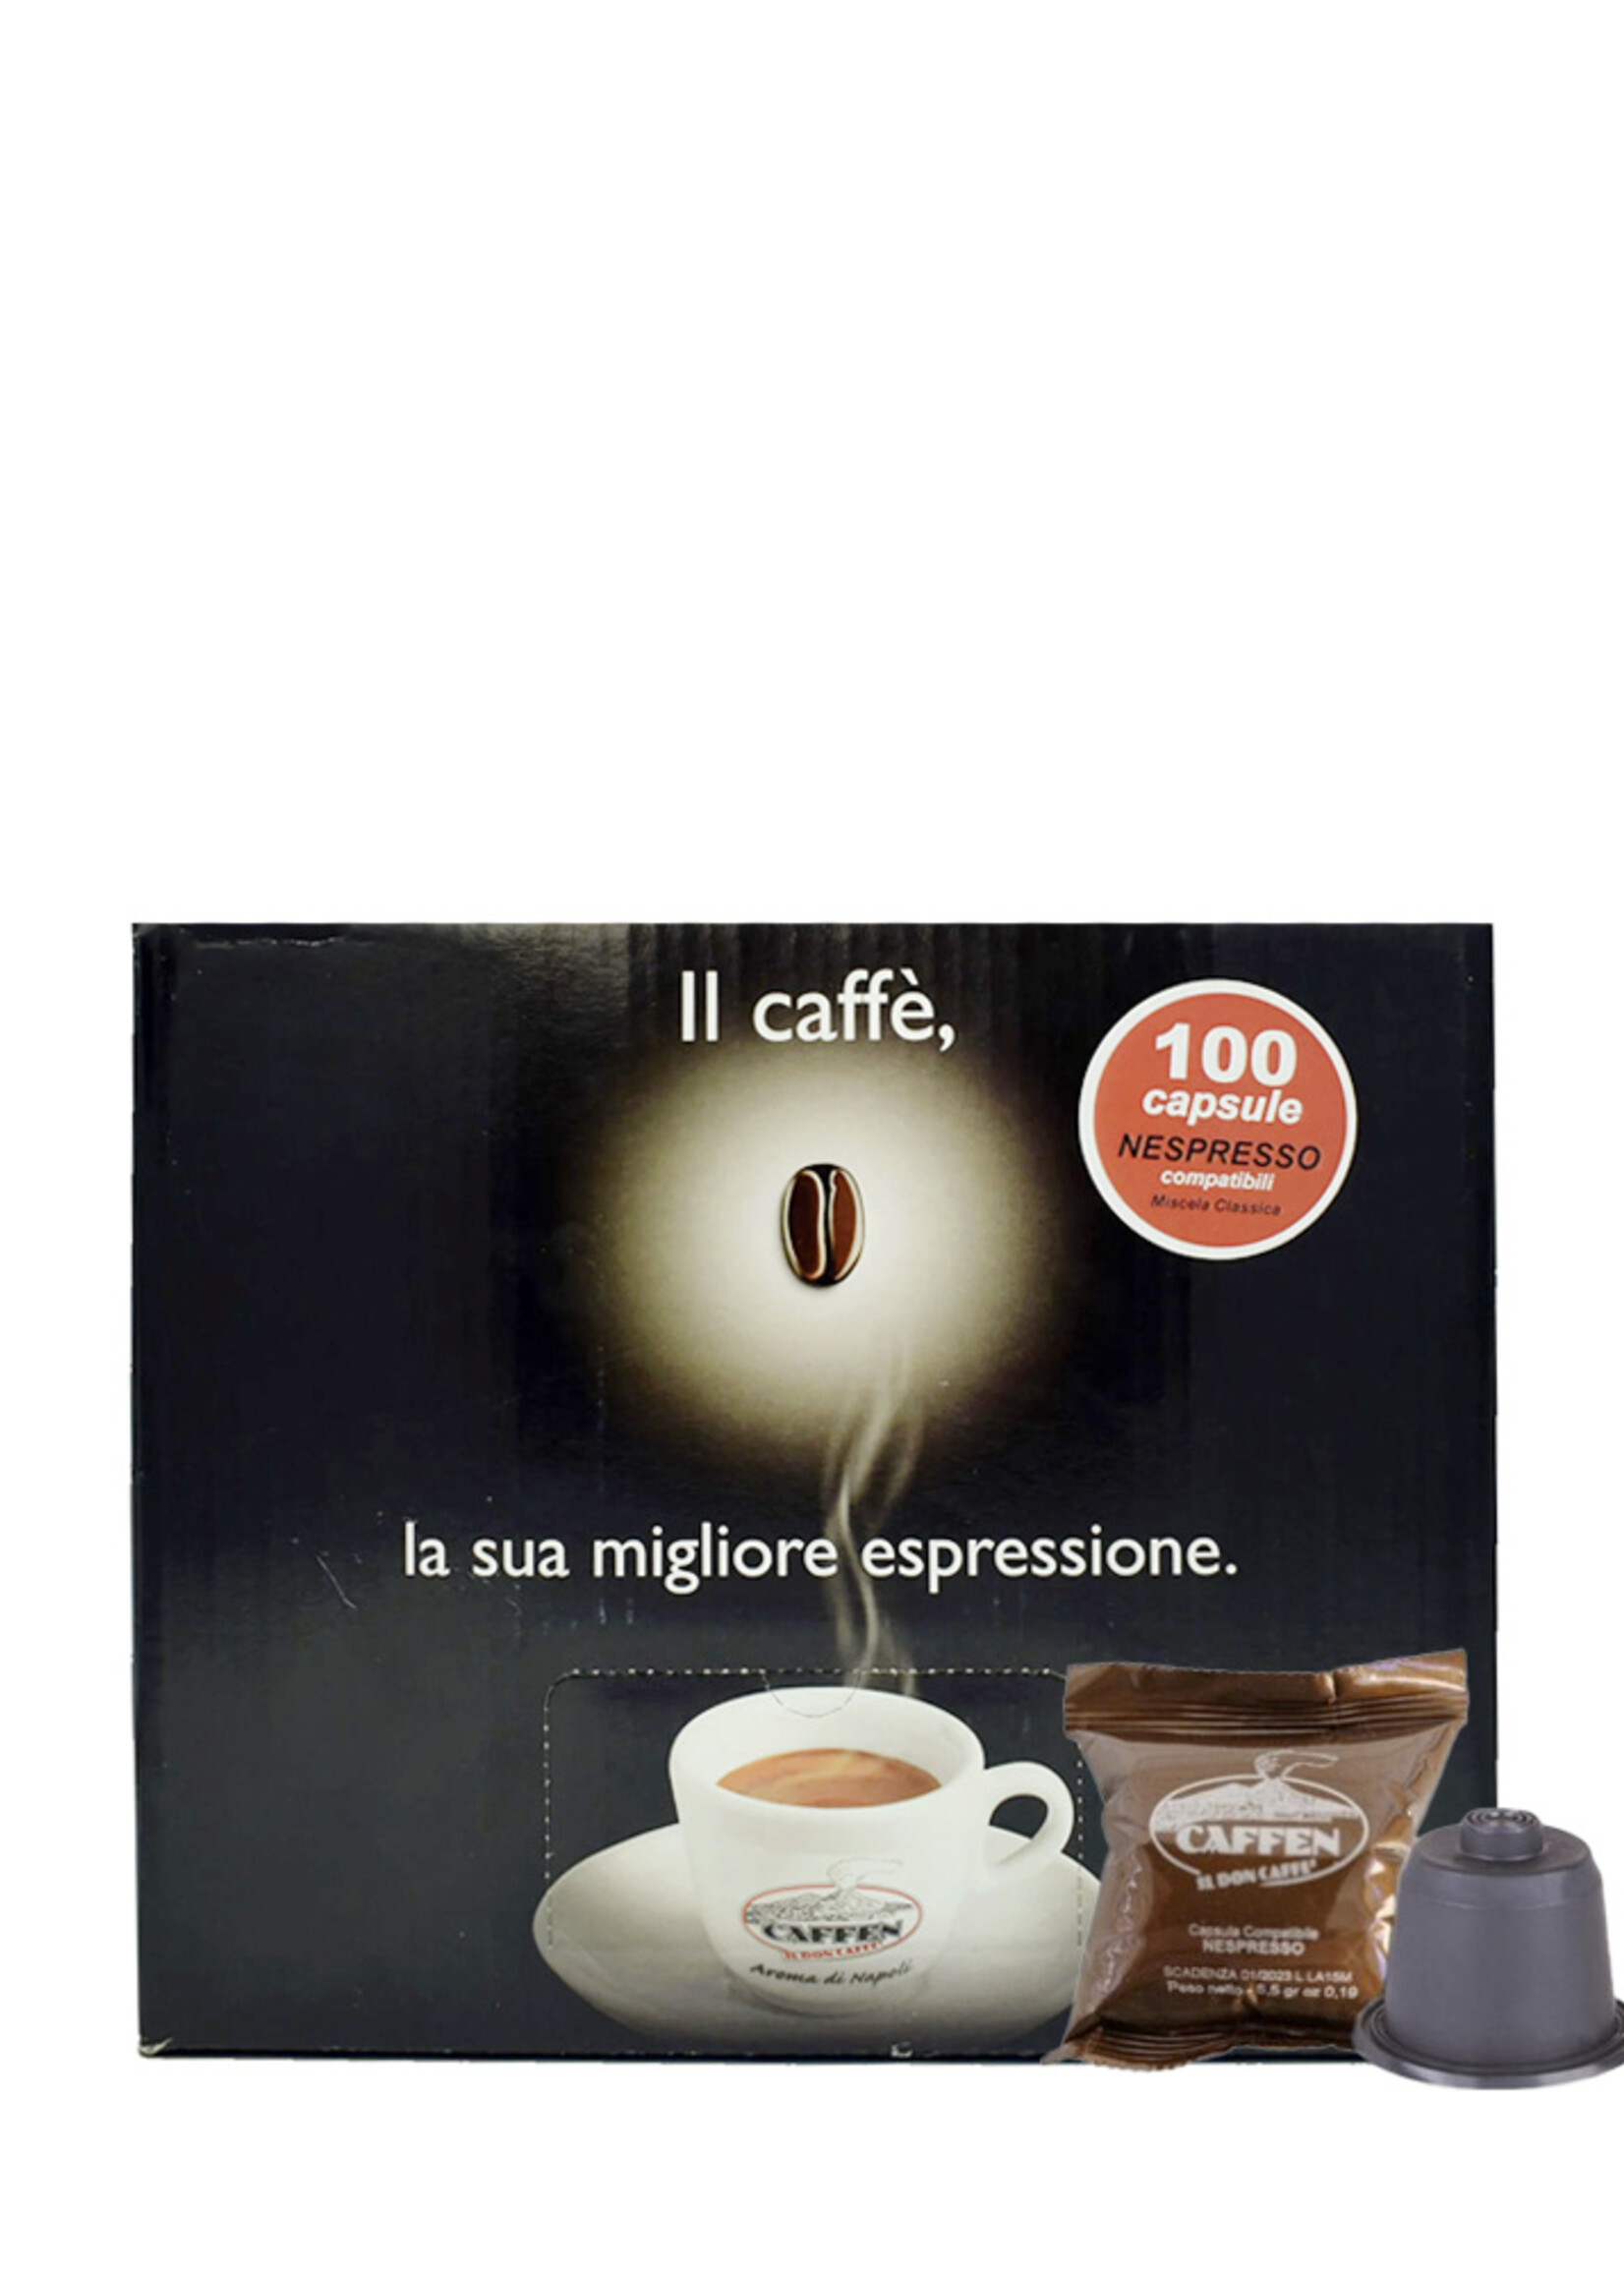 caffen Capsule Nespresso 100 pezzi - Miscela Classica - 70% Arabica Brasile - 30% Robusta India - Caffen